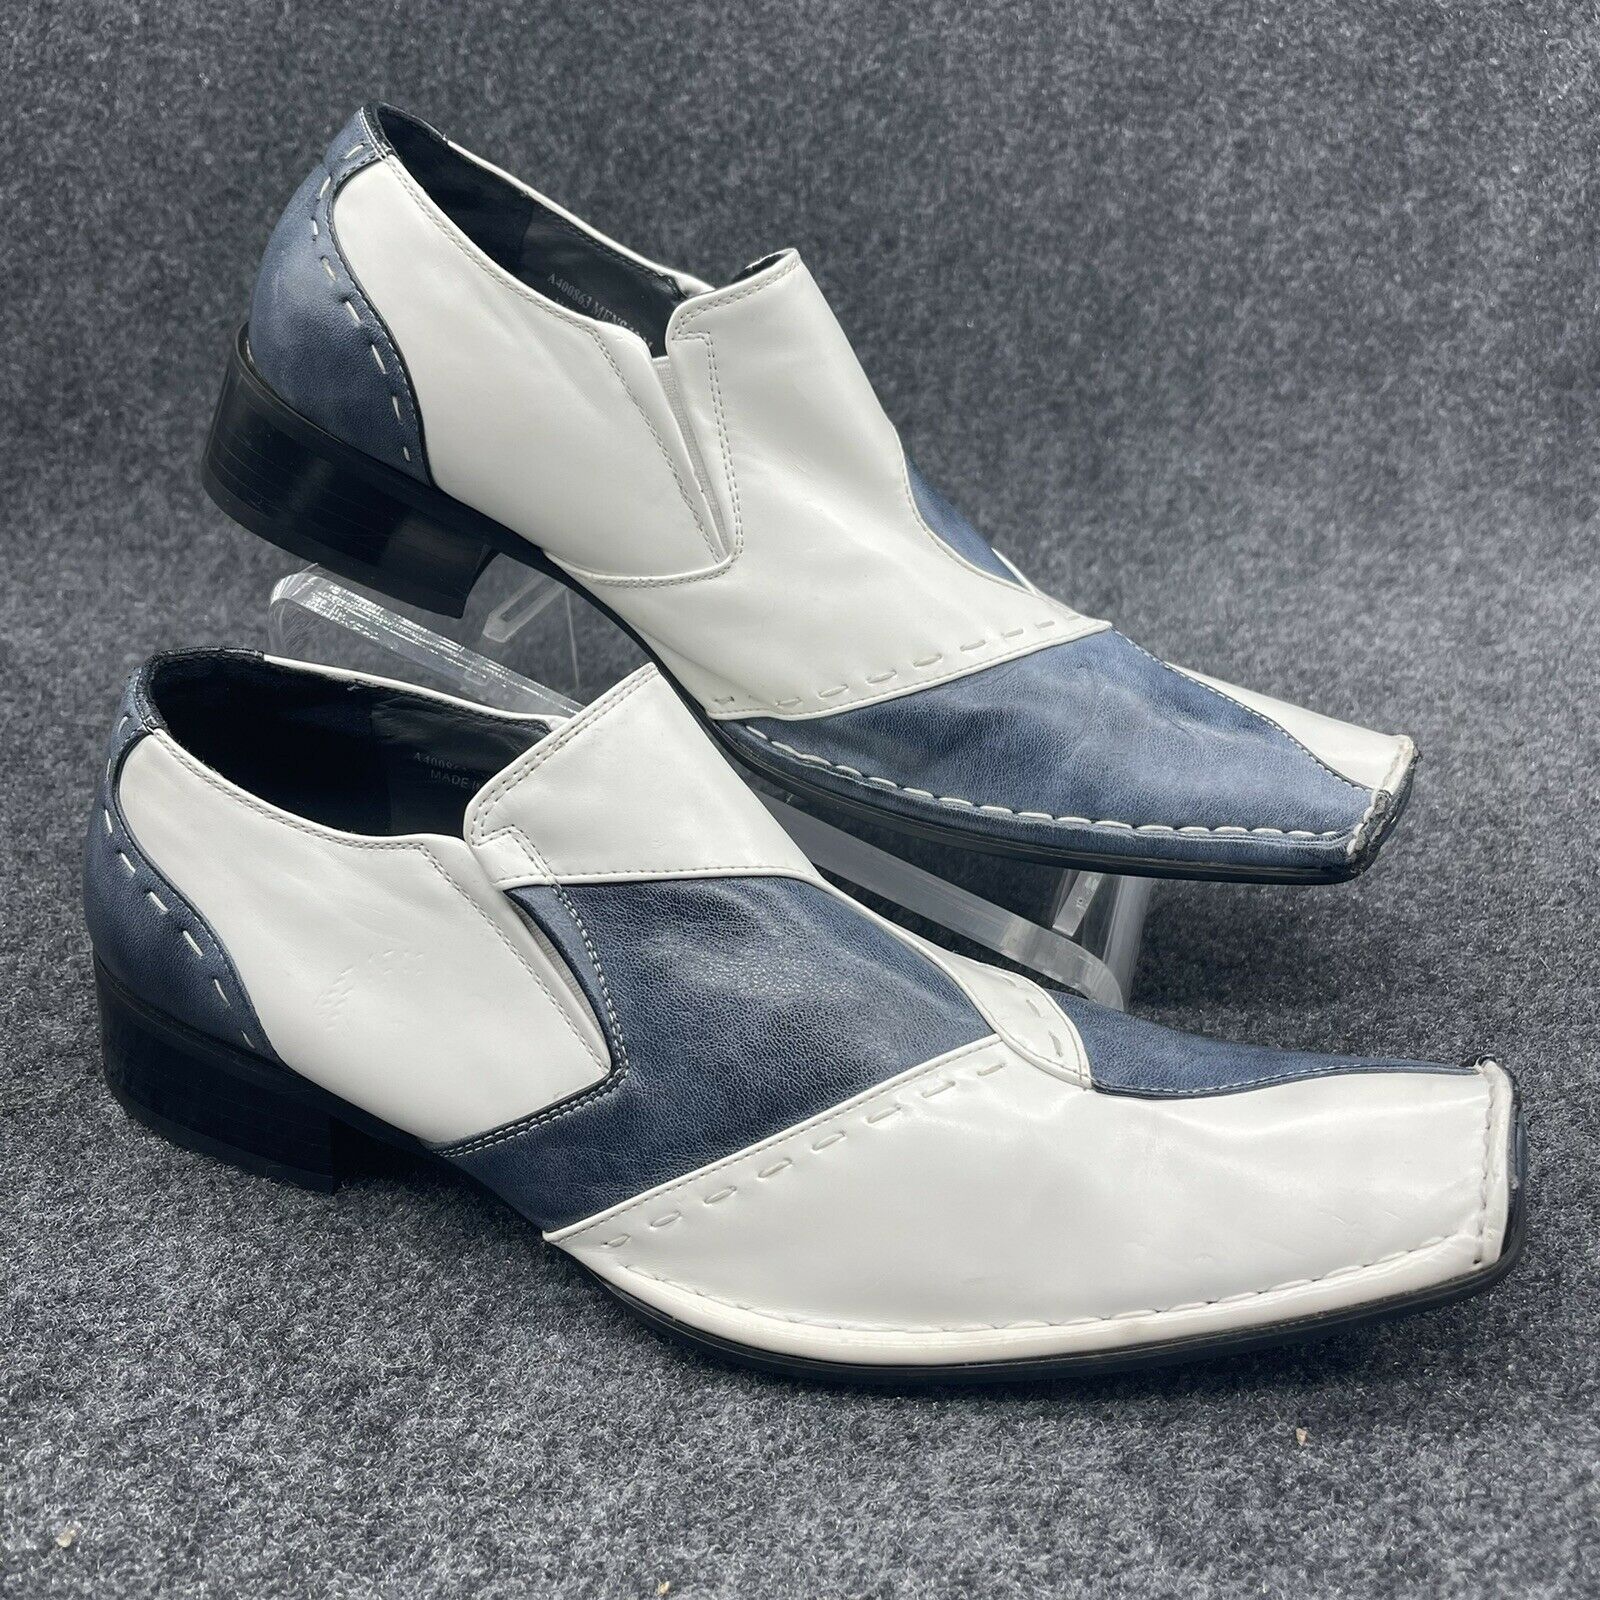 Antonio Zengara Exotic White/ Blue Point Square Toe Dress Shoes Size 12